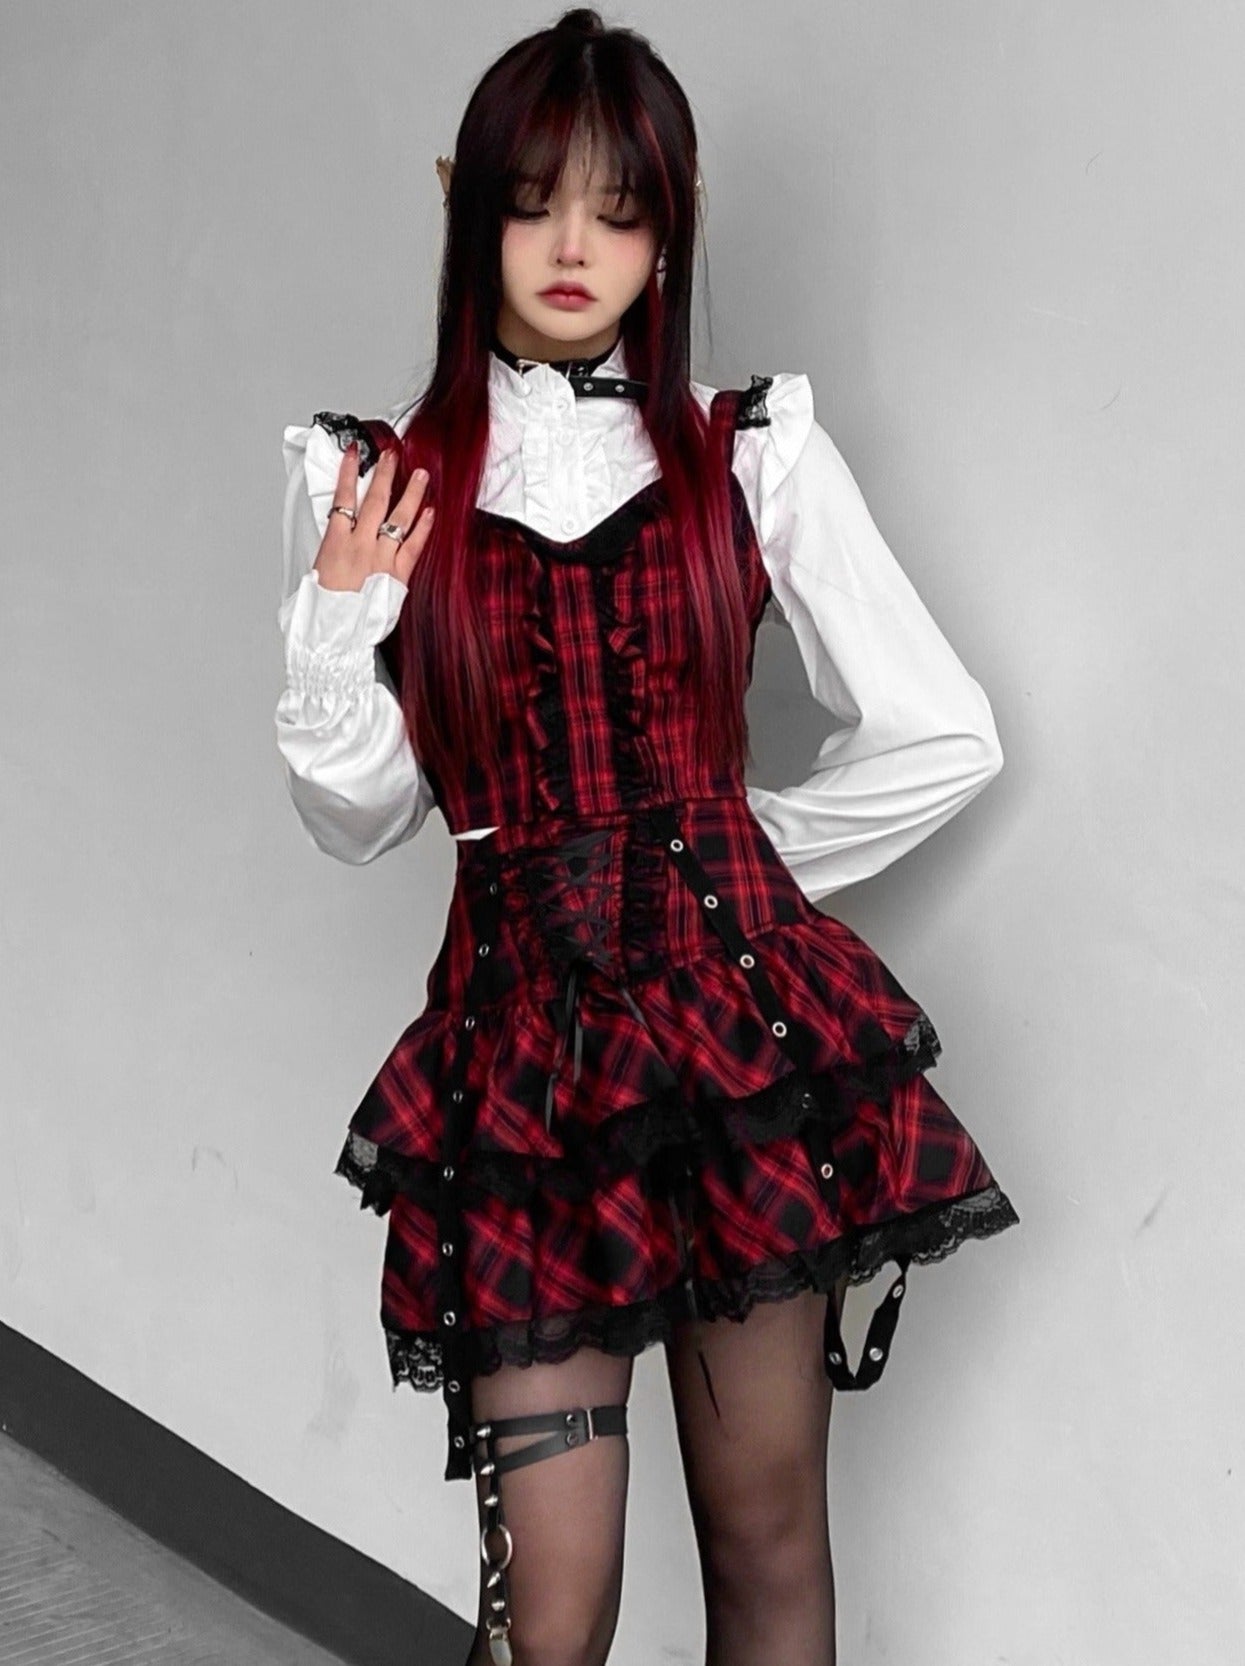 Gothic A-line Lolita Skirt Plus Size Suspender Button Front Skirt